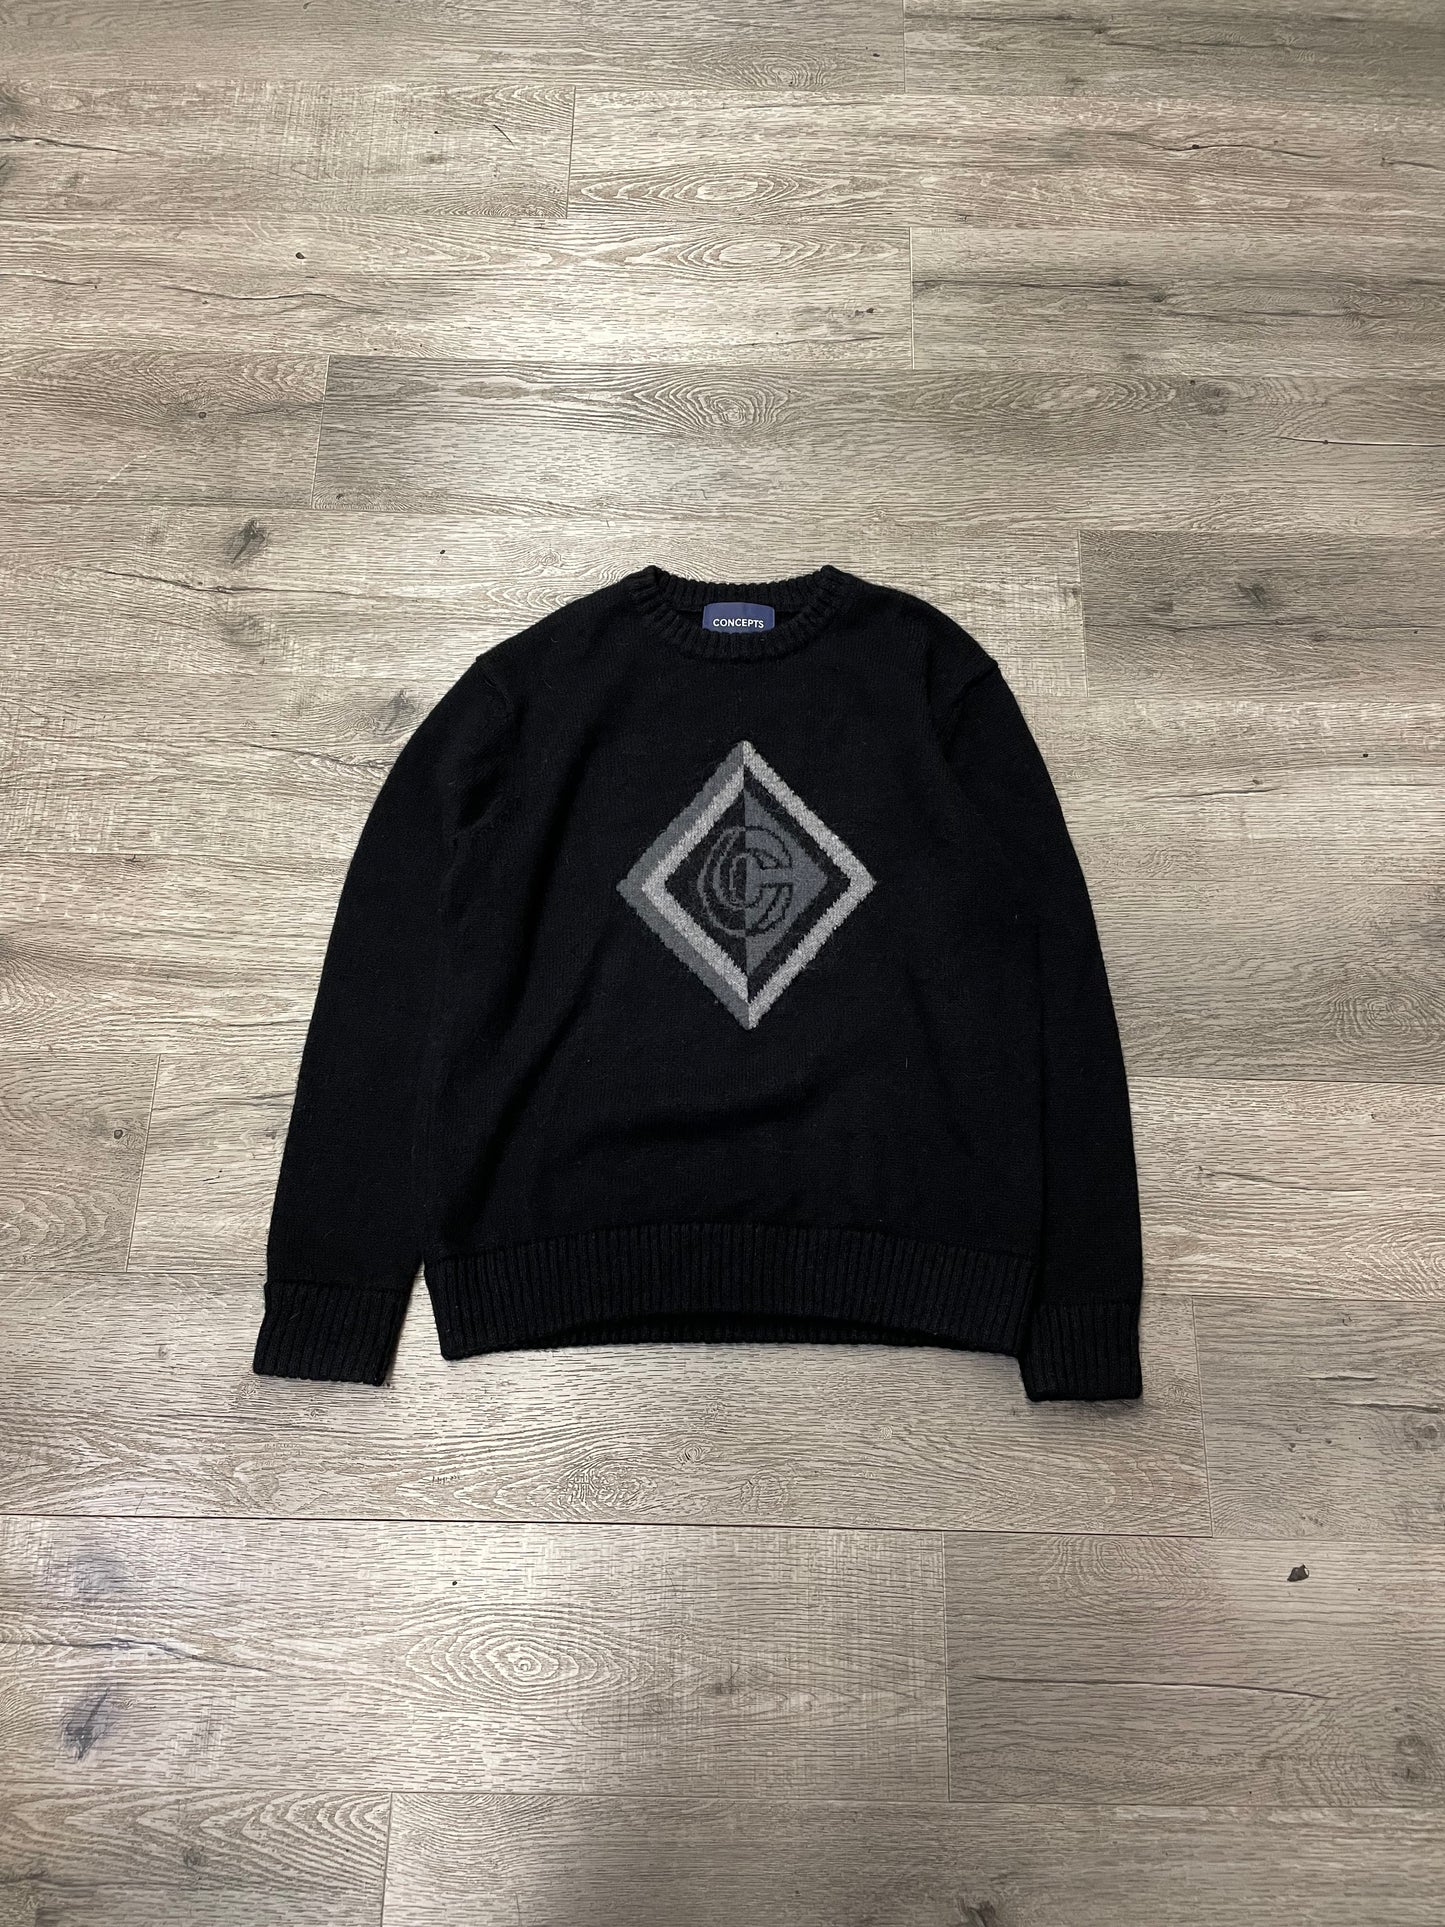 Concepts Diamond Sweater